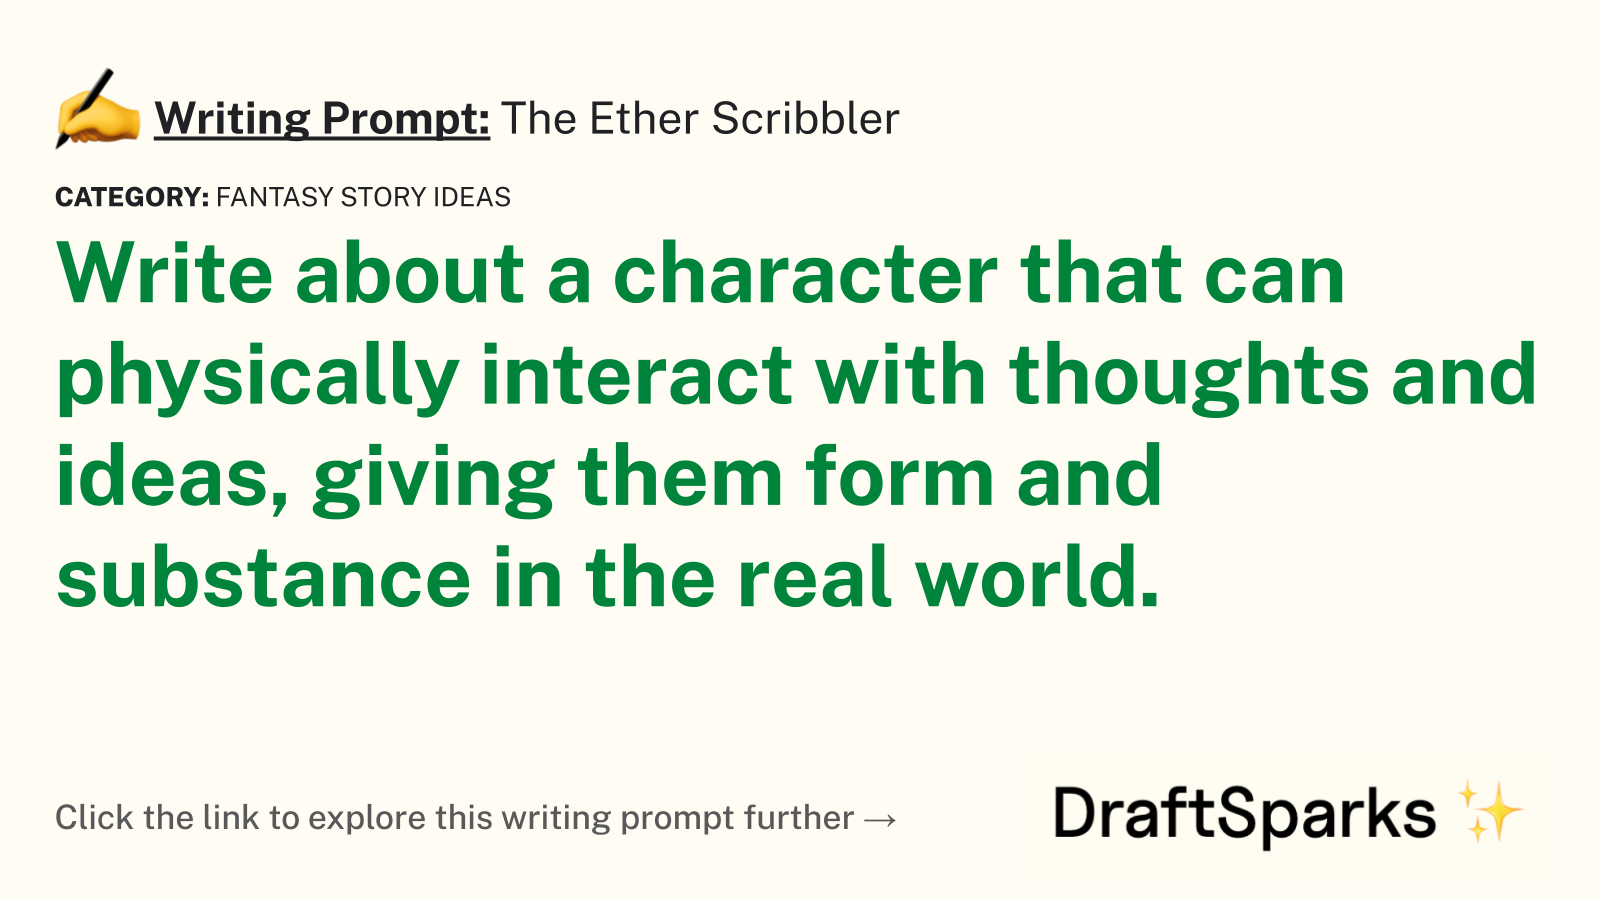 The Ether Scribbler